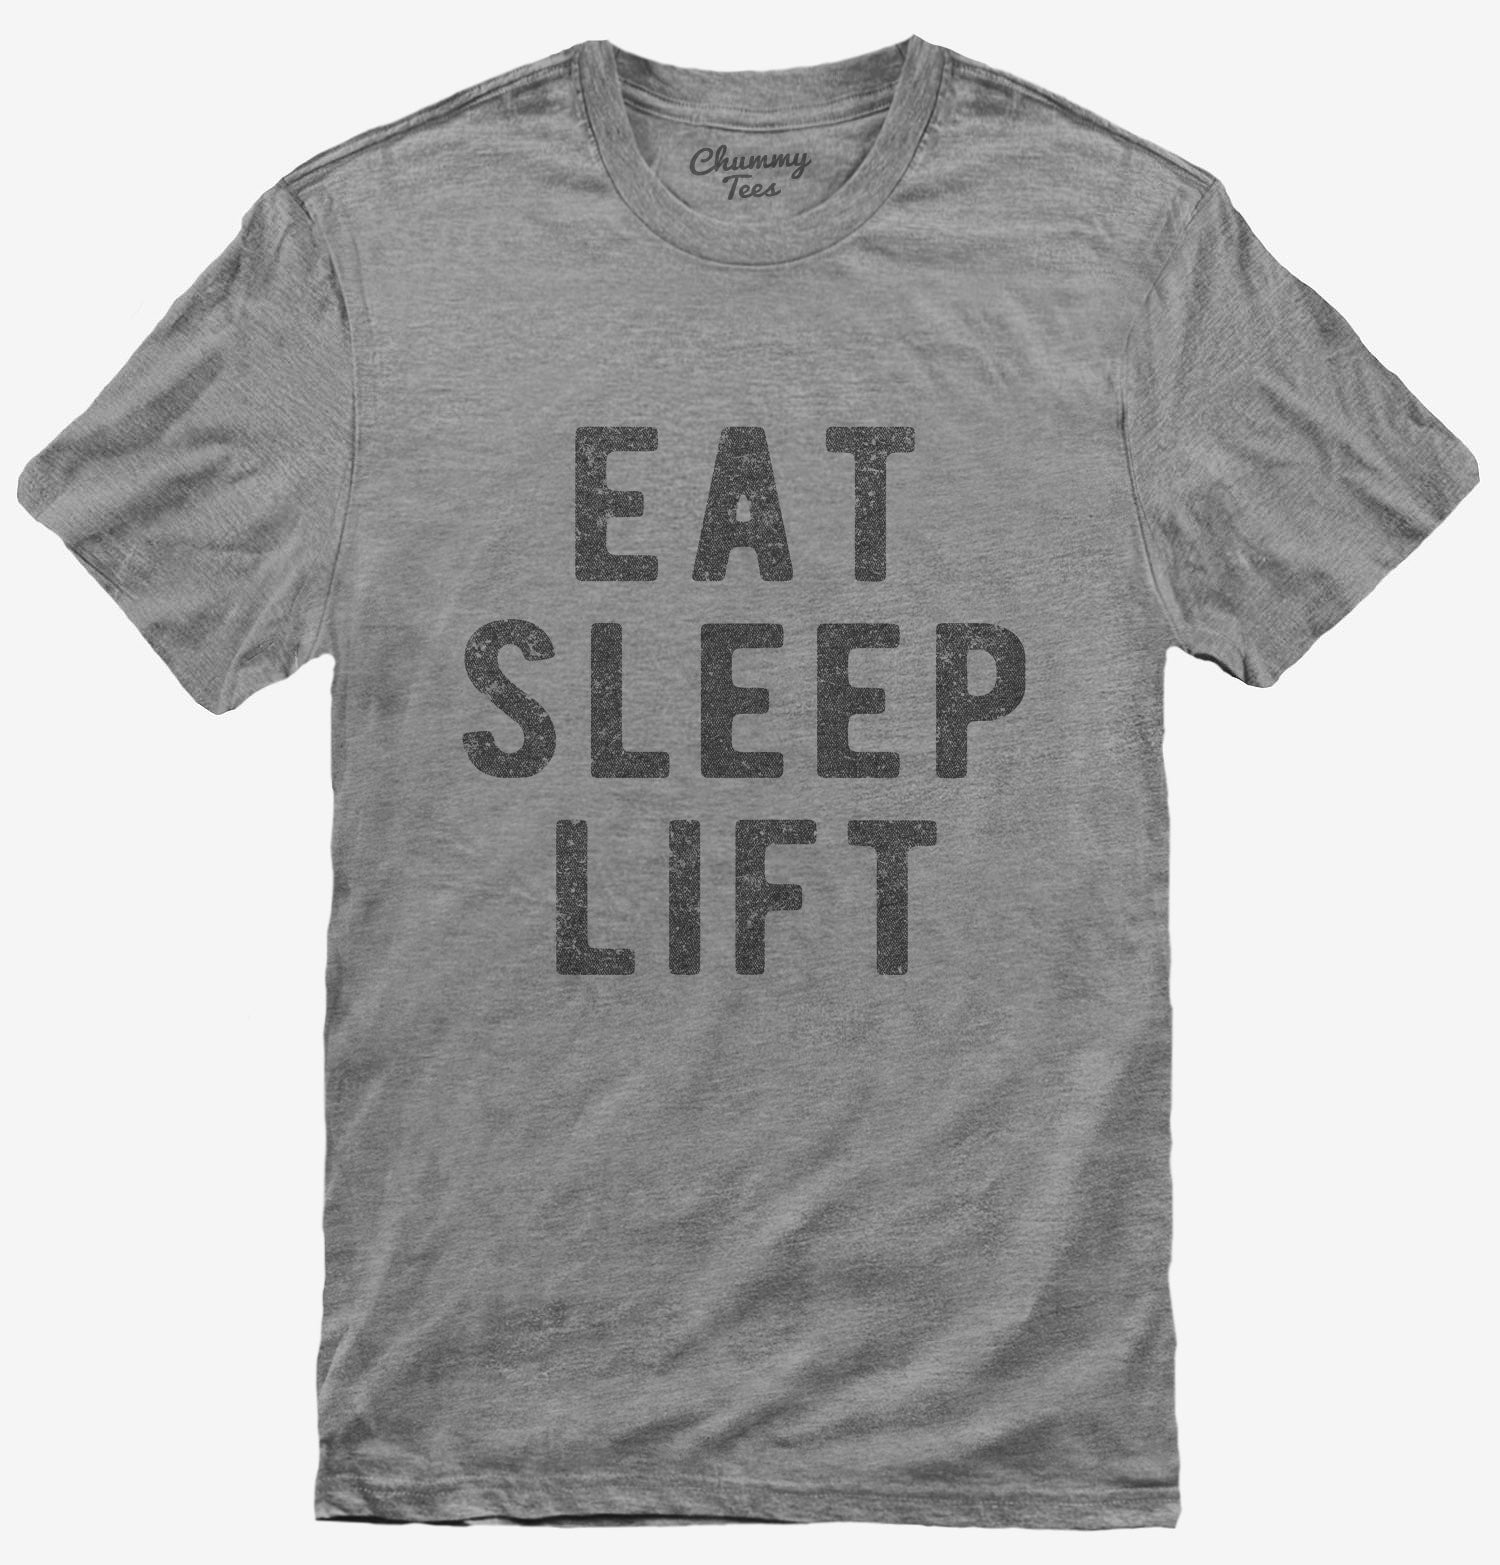 Eat Sleep Fish Repeat Funny Fishing Mens V-Neck Cotton T-Shirt